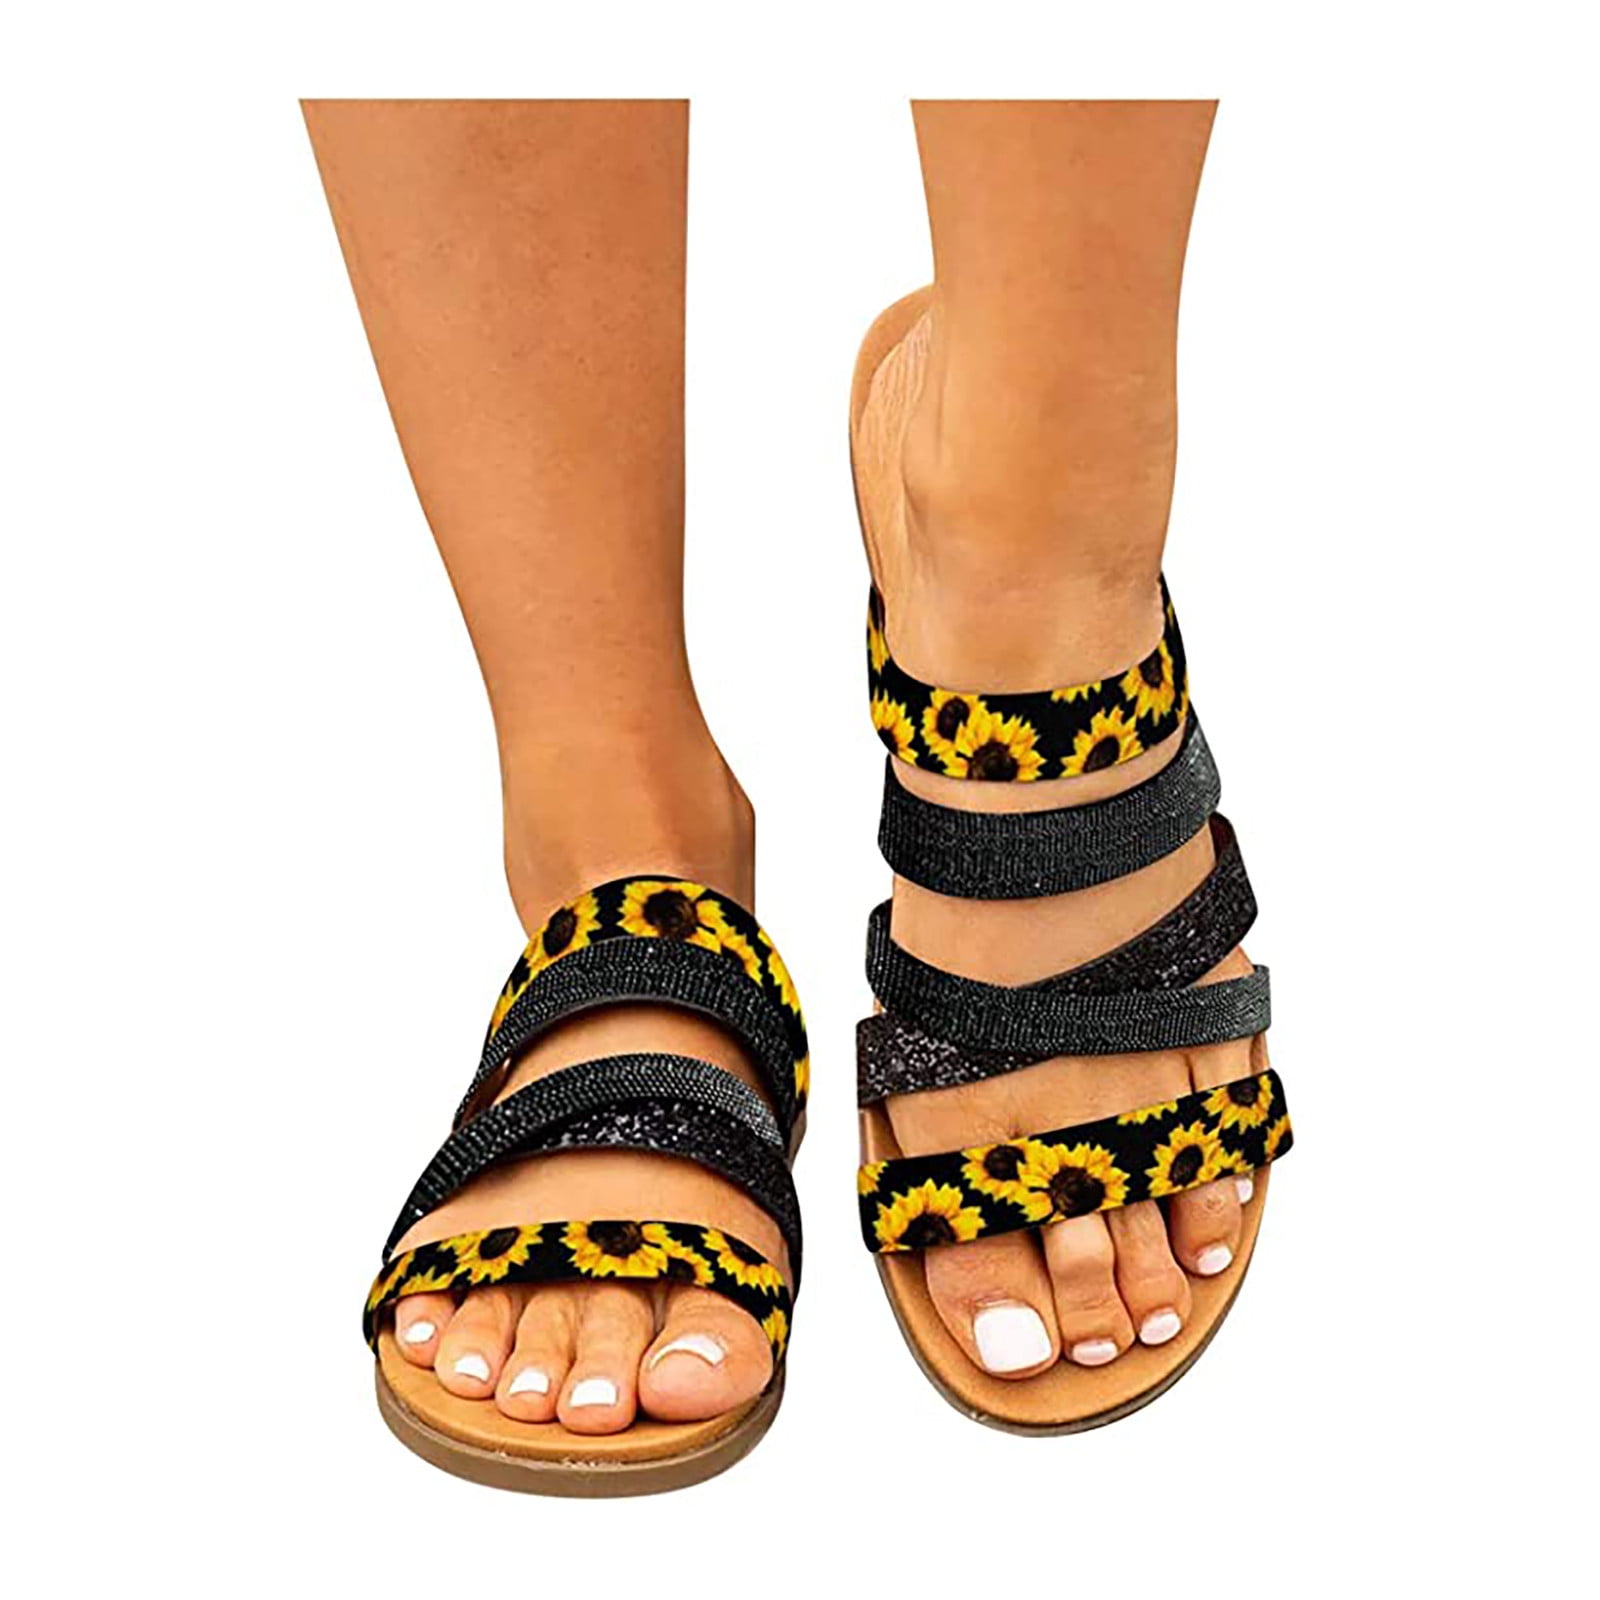 Details about   Women Flatform Sandals Summer Cross Strap Casual Gladiator Platform Shoes Zipper